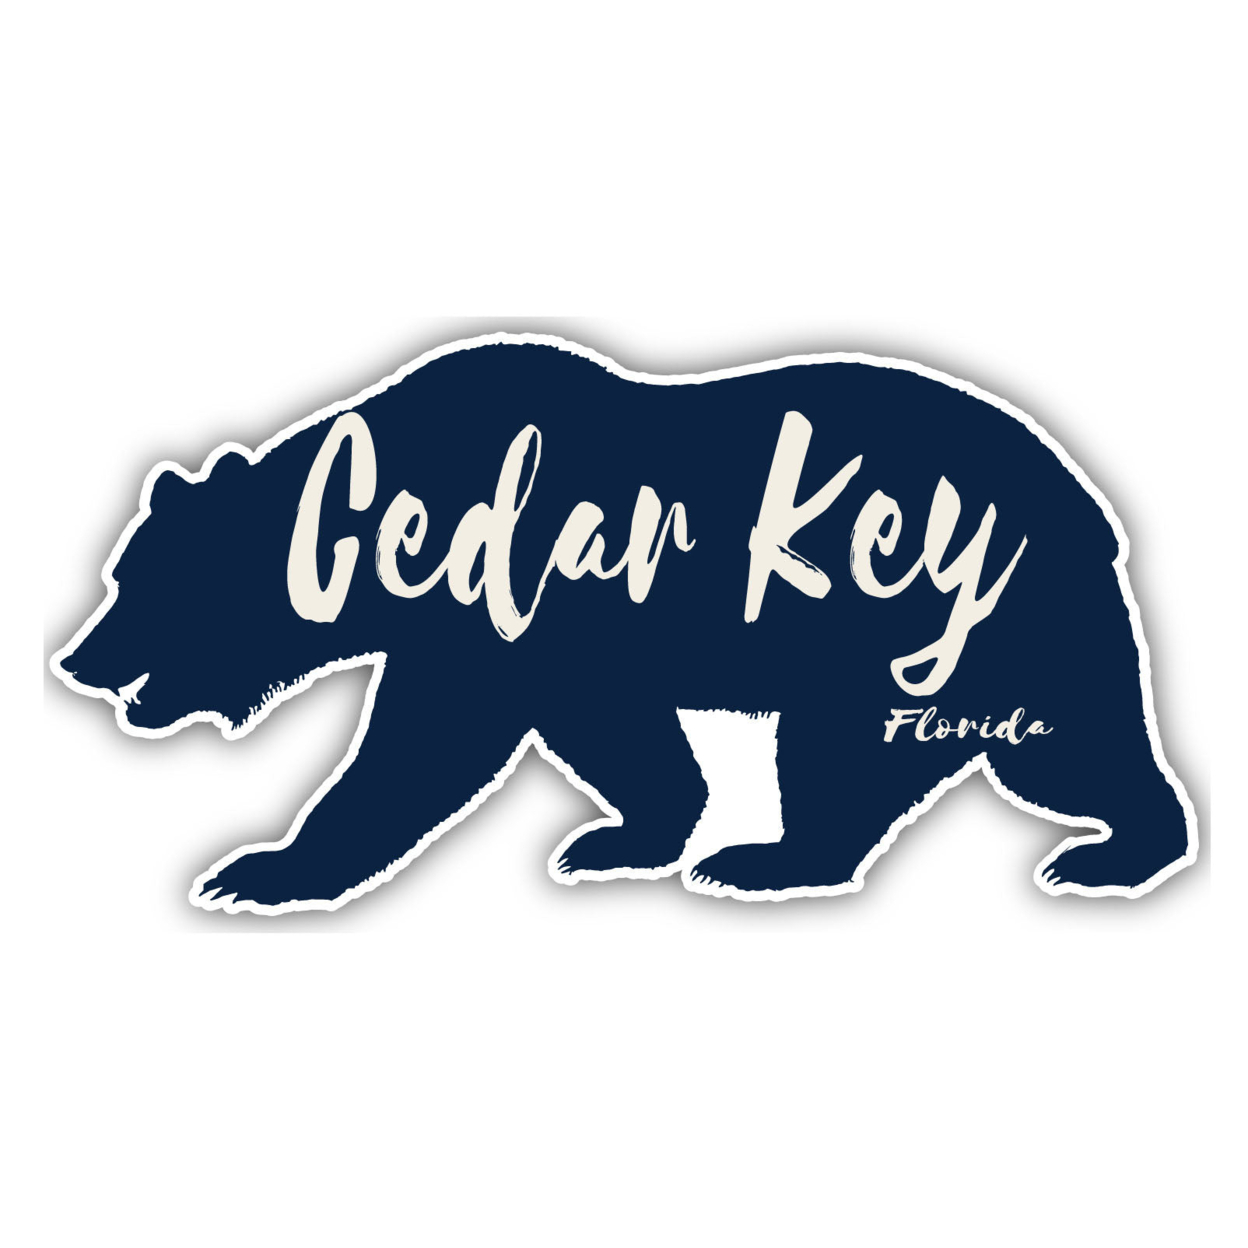 Cedar Key Florida Souvenir Decorative Stickers (Choose Theme And Size) - 4-Pack, 2-Inch, Camp Life